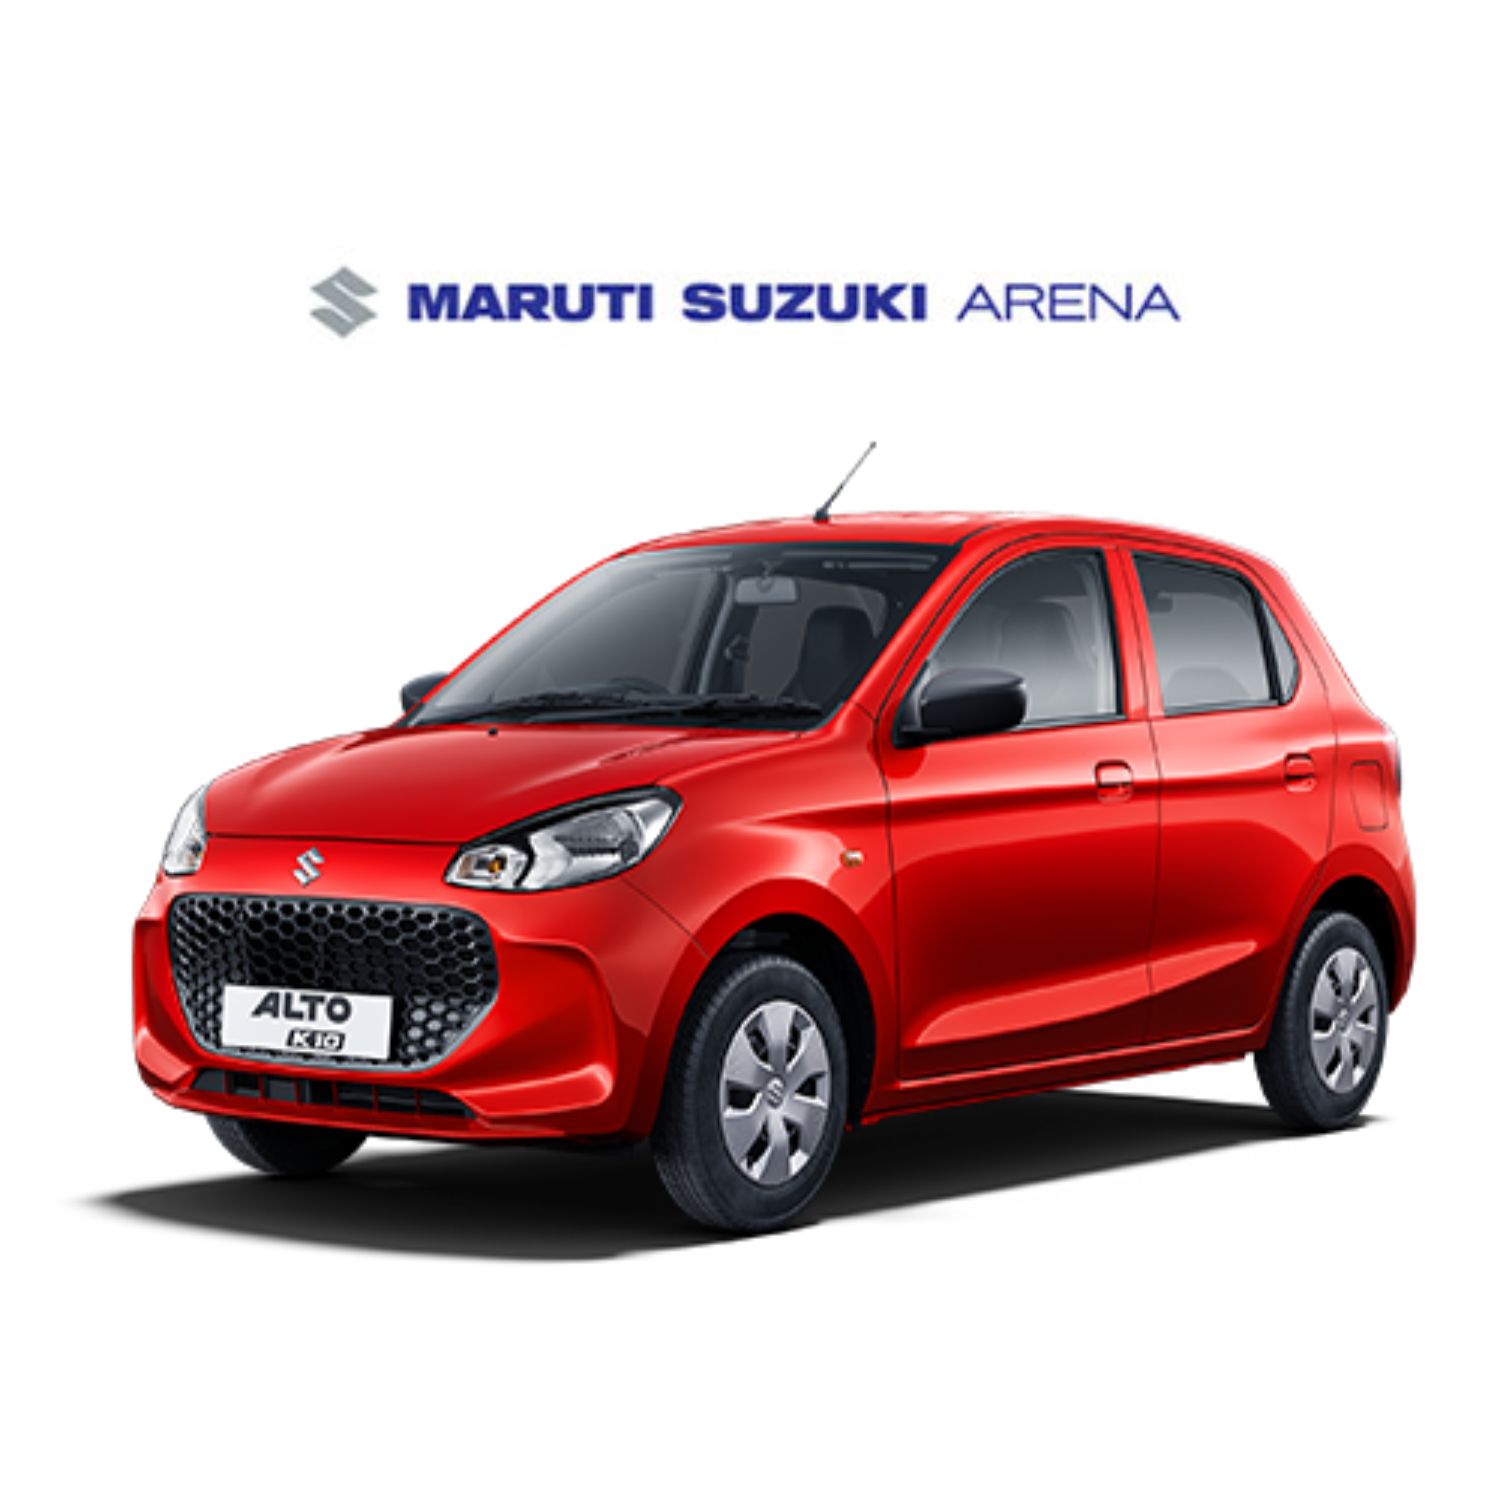 Alto k10 Maruti Suzuki Indore on Road Price